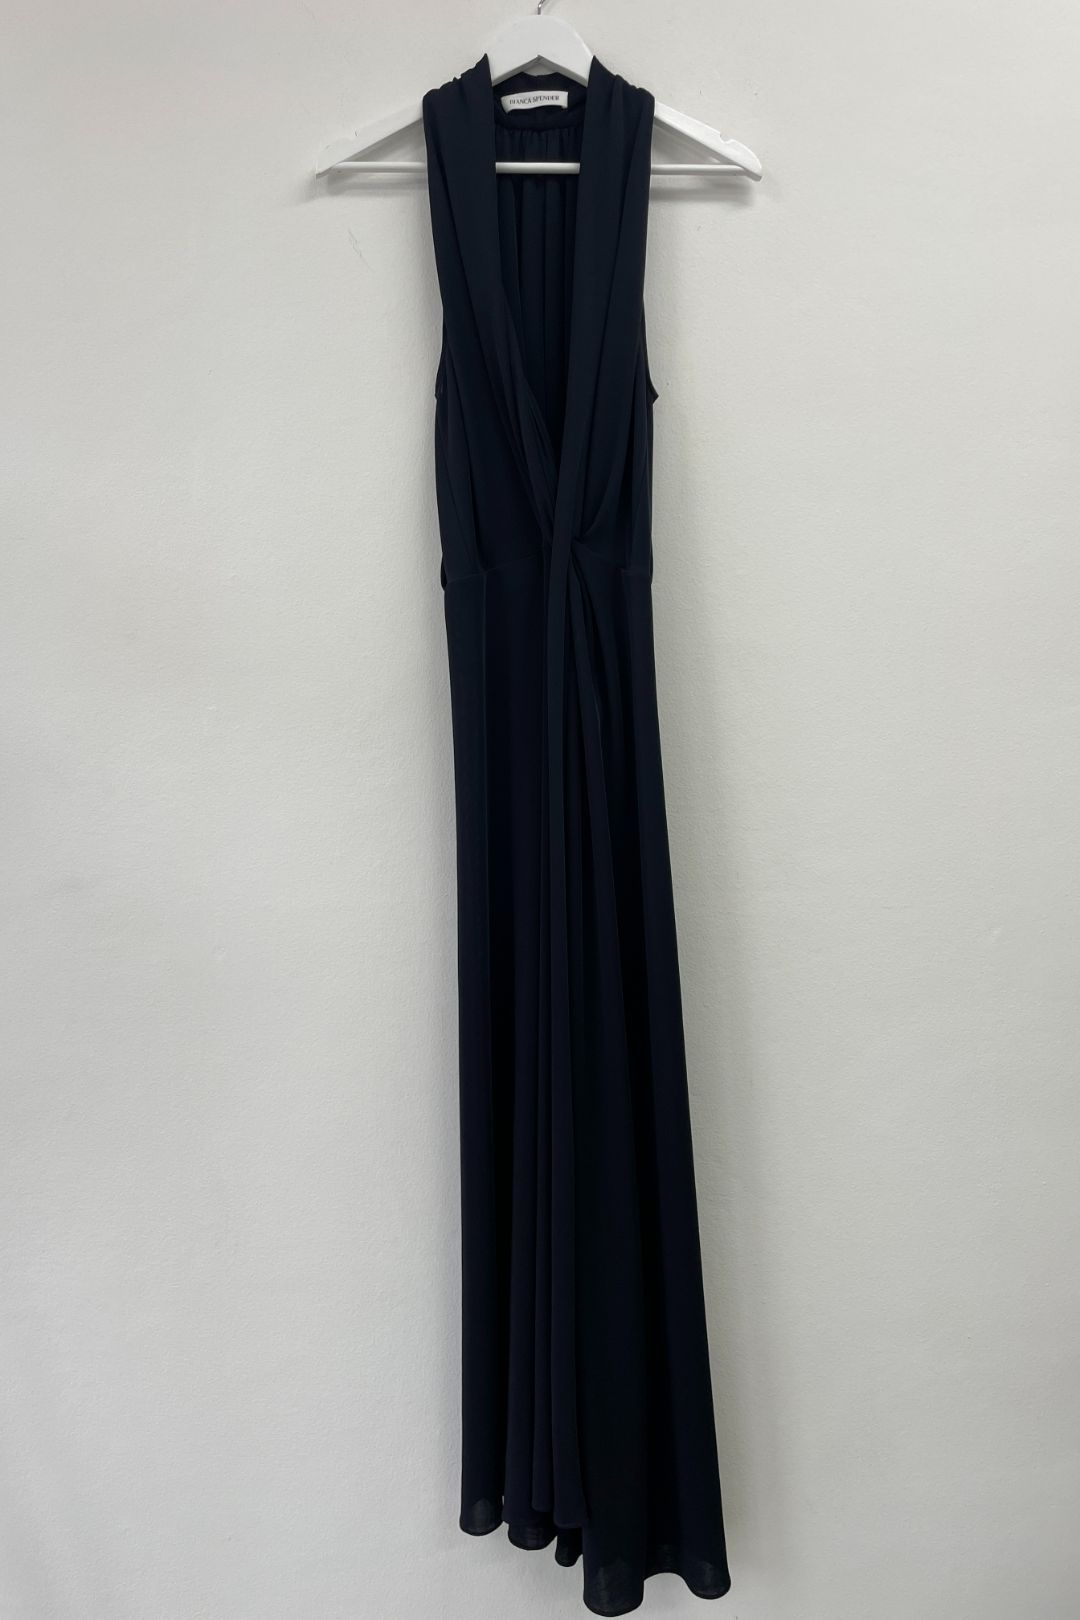 Bianca Spender Black Jersey Entwined Midi Dress